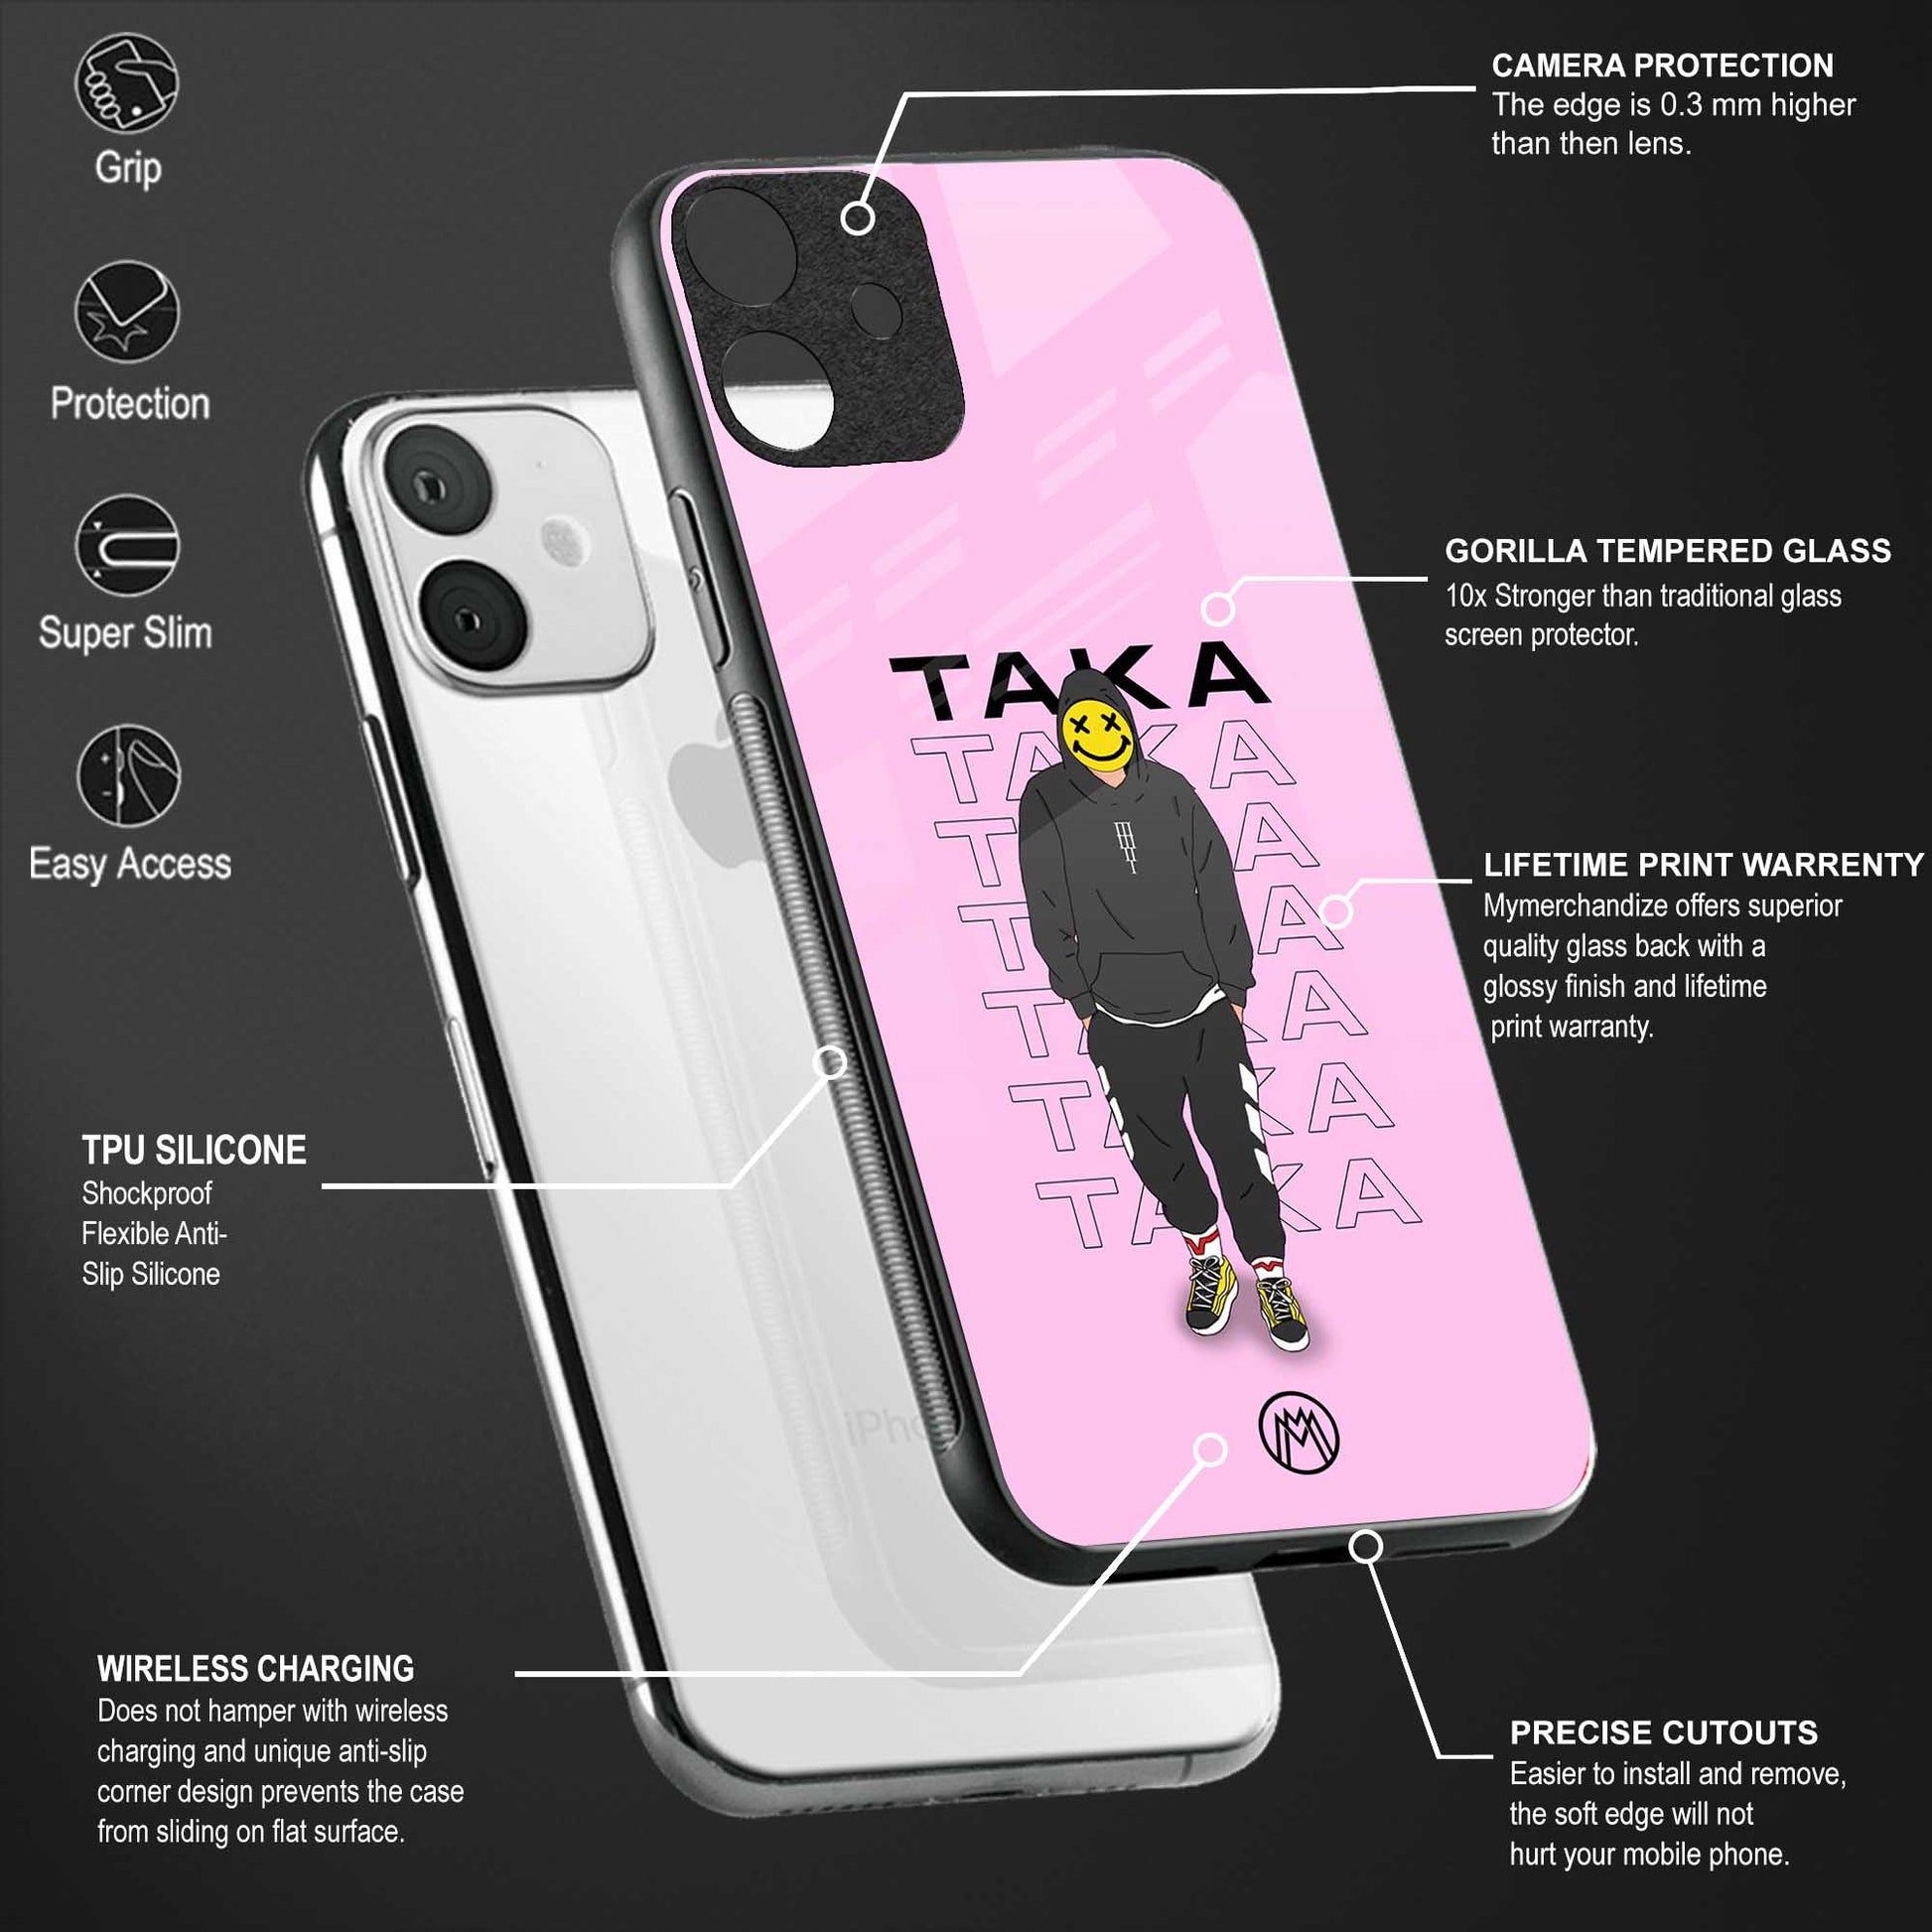 taka taka glass case for oneplus 7 image-4